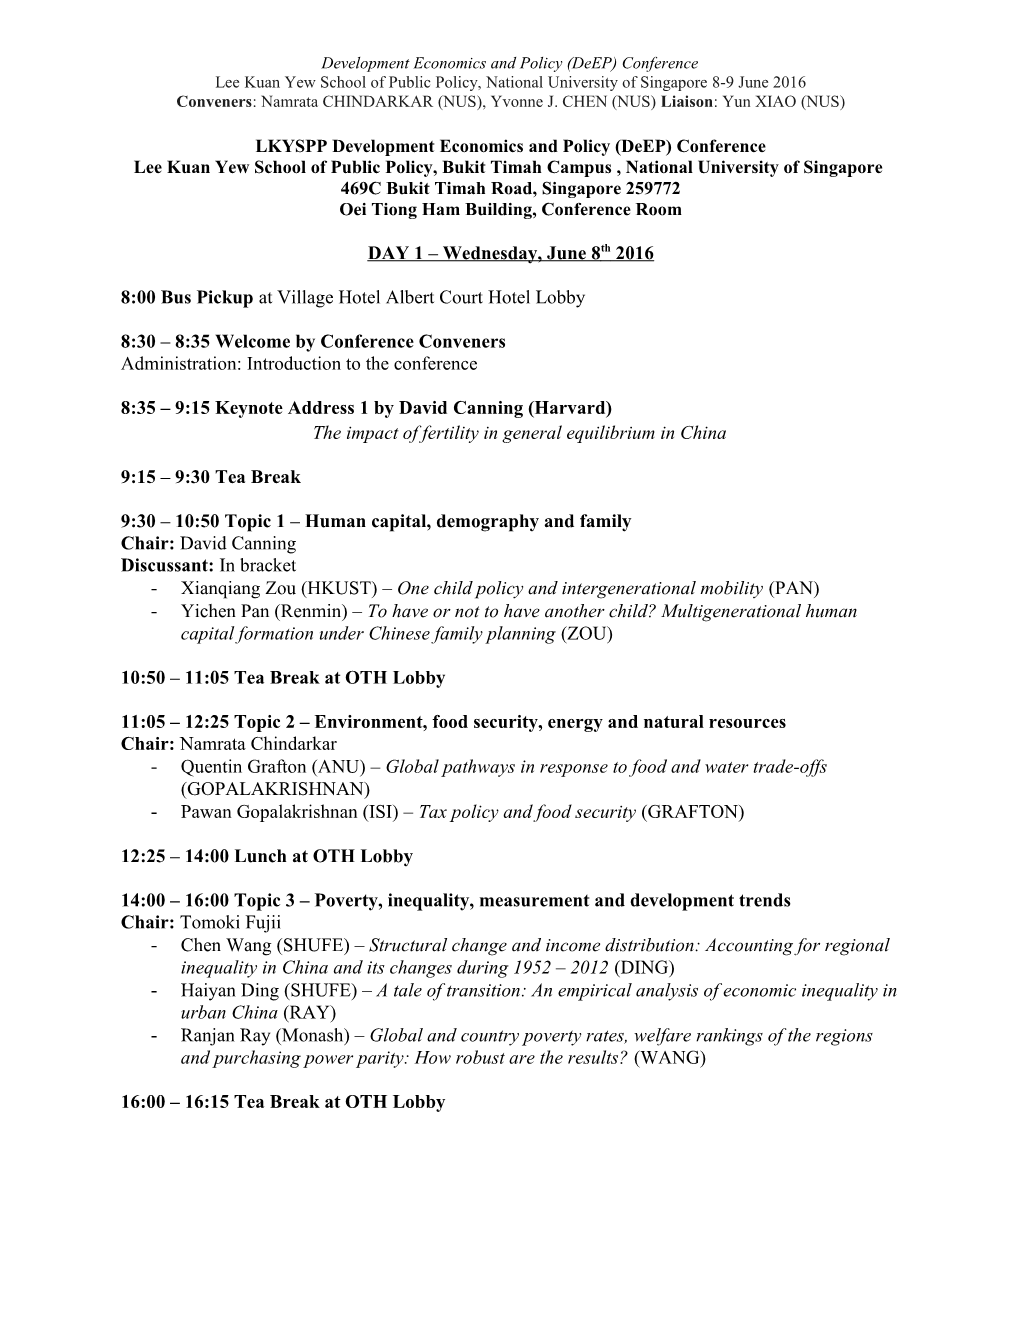 LKYSPP Development Economics and Policy (Deep) Conference